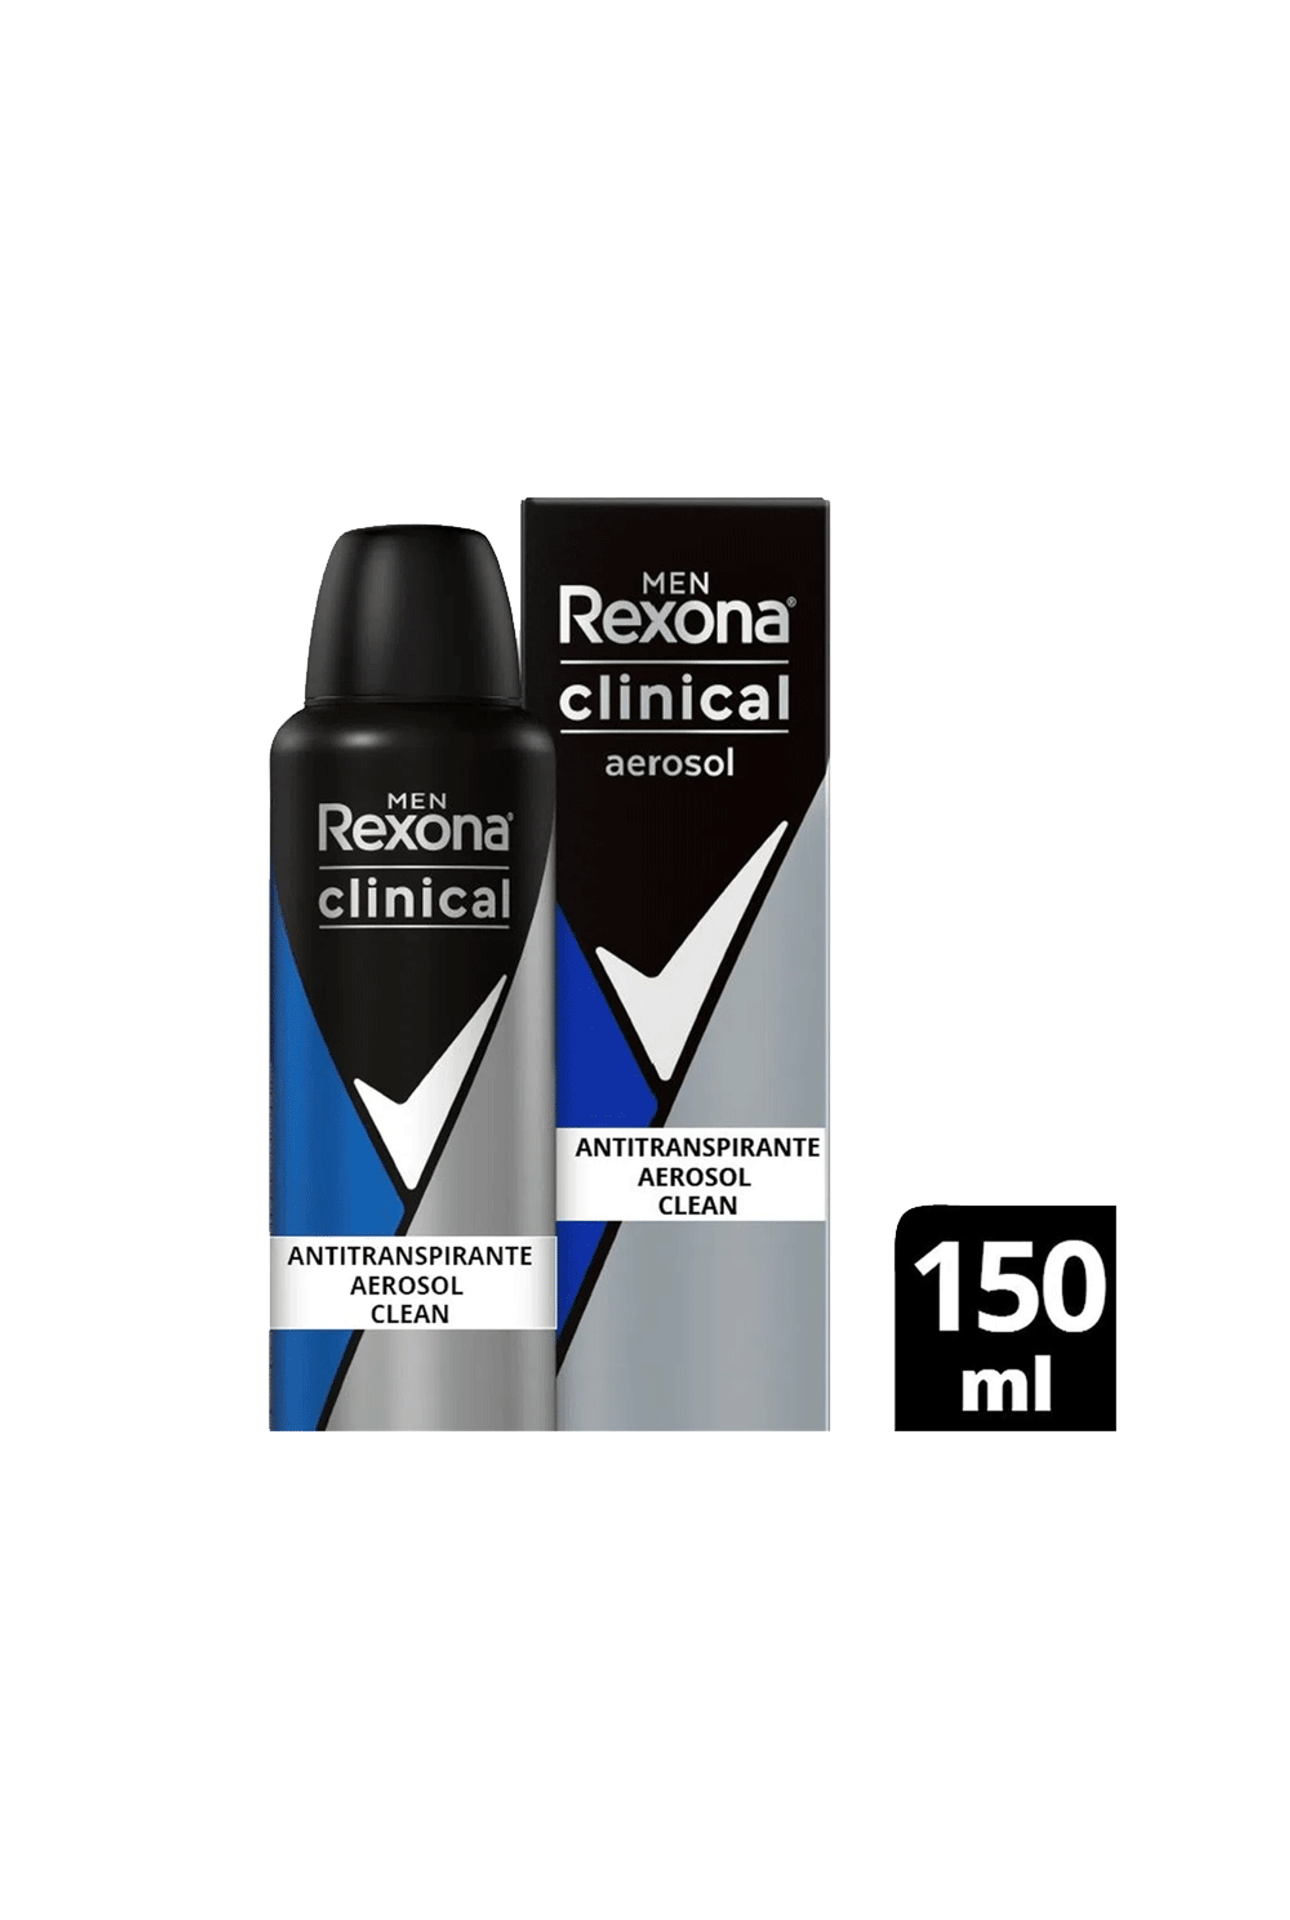 Rexona-Antitranspirante-Rexona-Clinical-Men-Clean-x-150-ml-7506306214972_img1